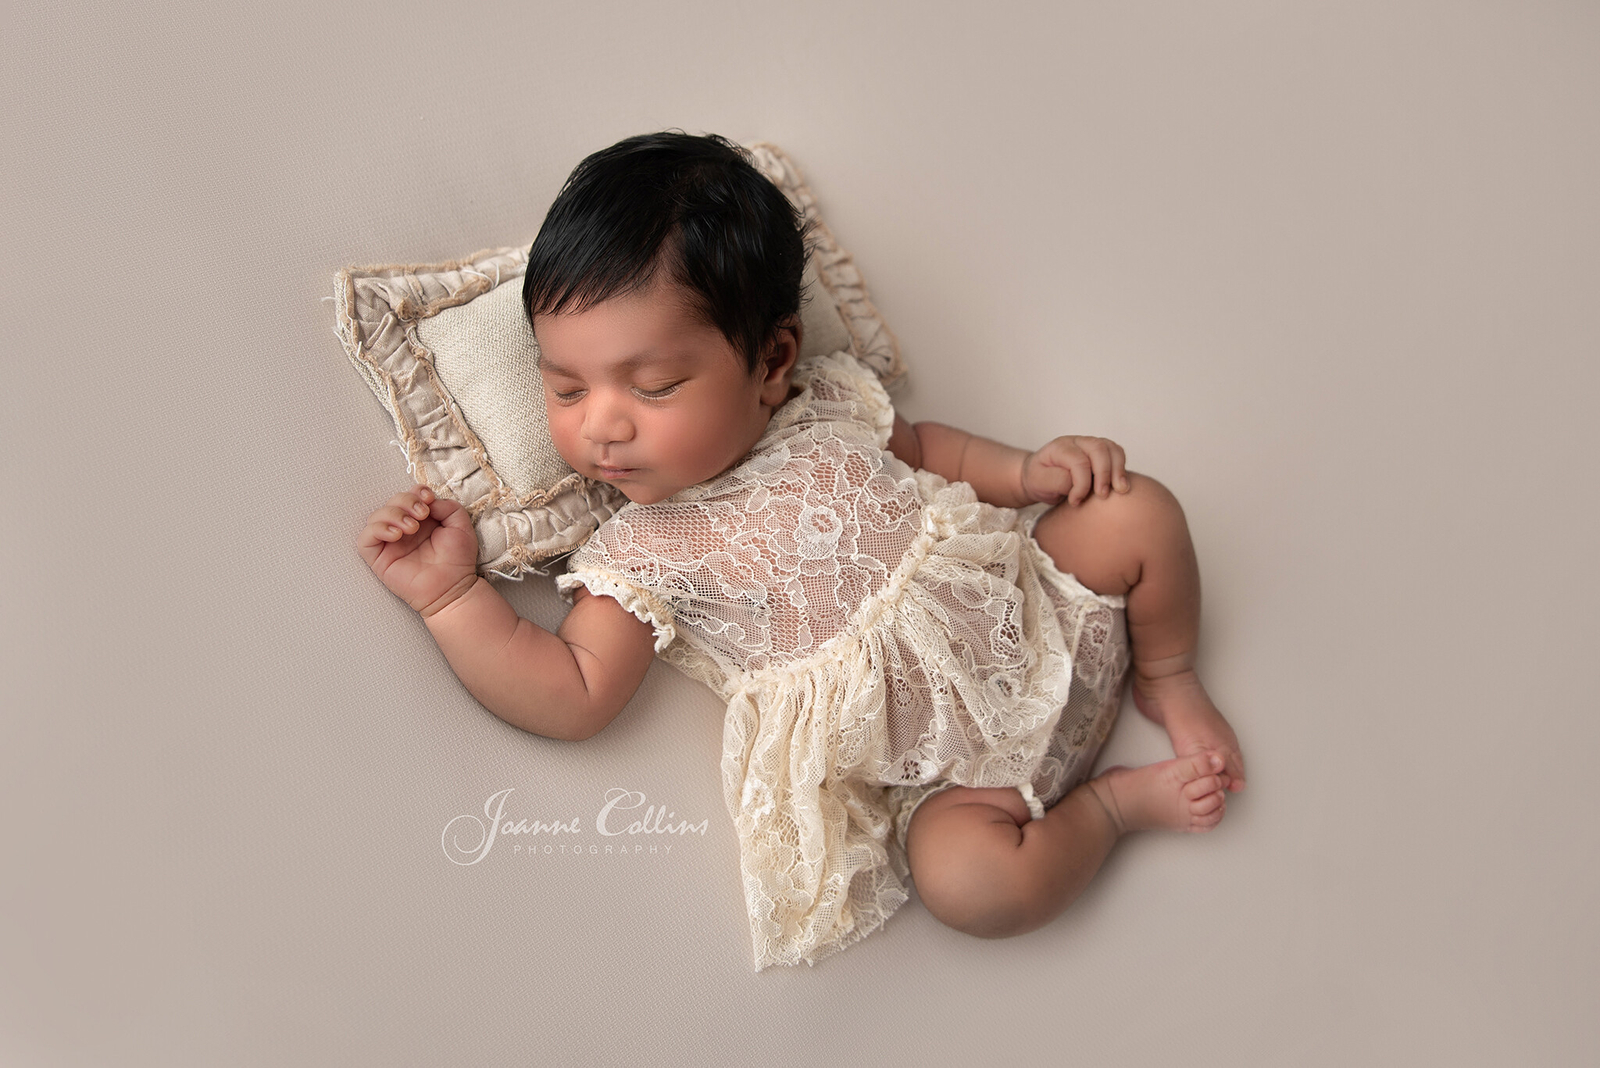 newborn photographer sittingbourne baby girl 9 days new in cute dress